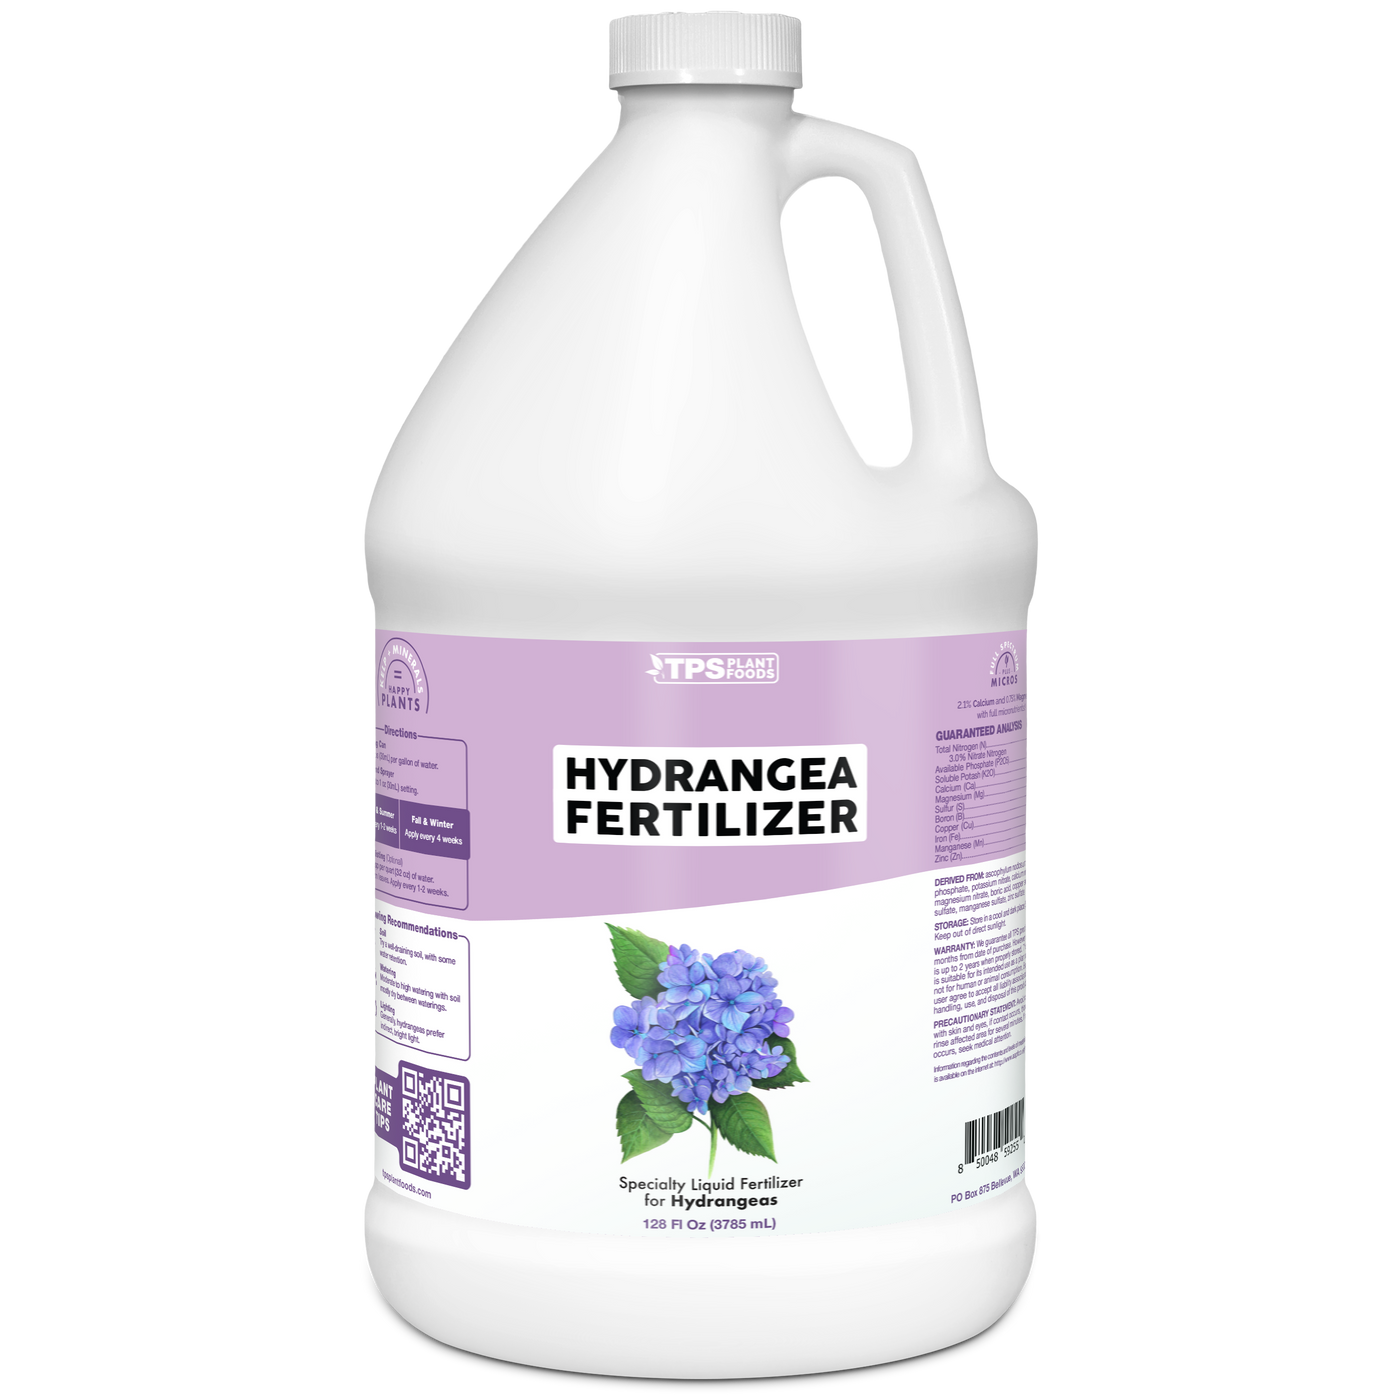 Hydrangea Fertilizer